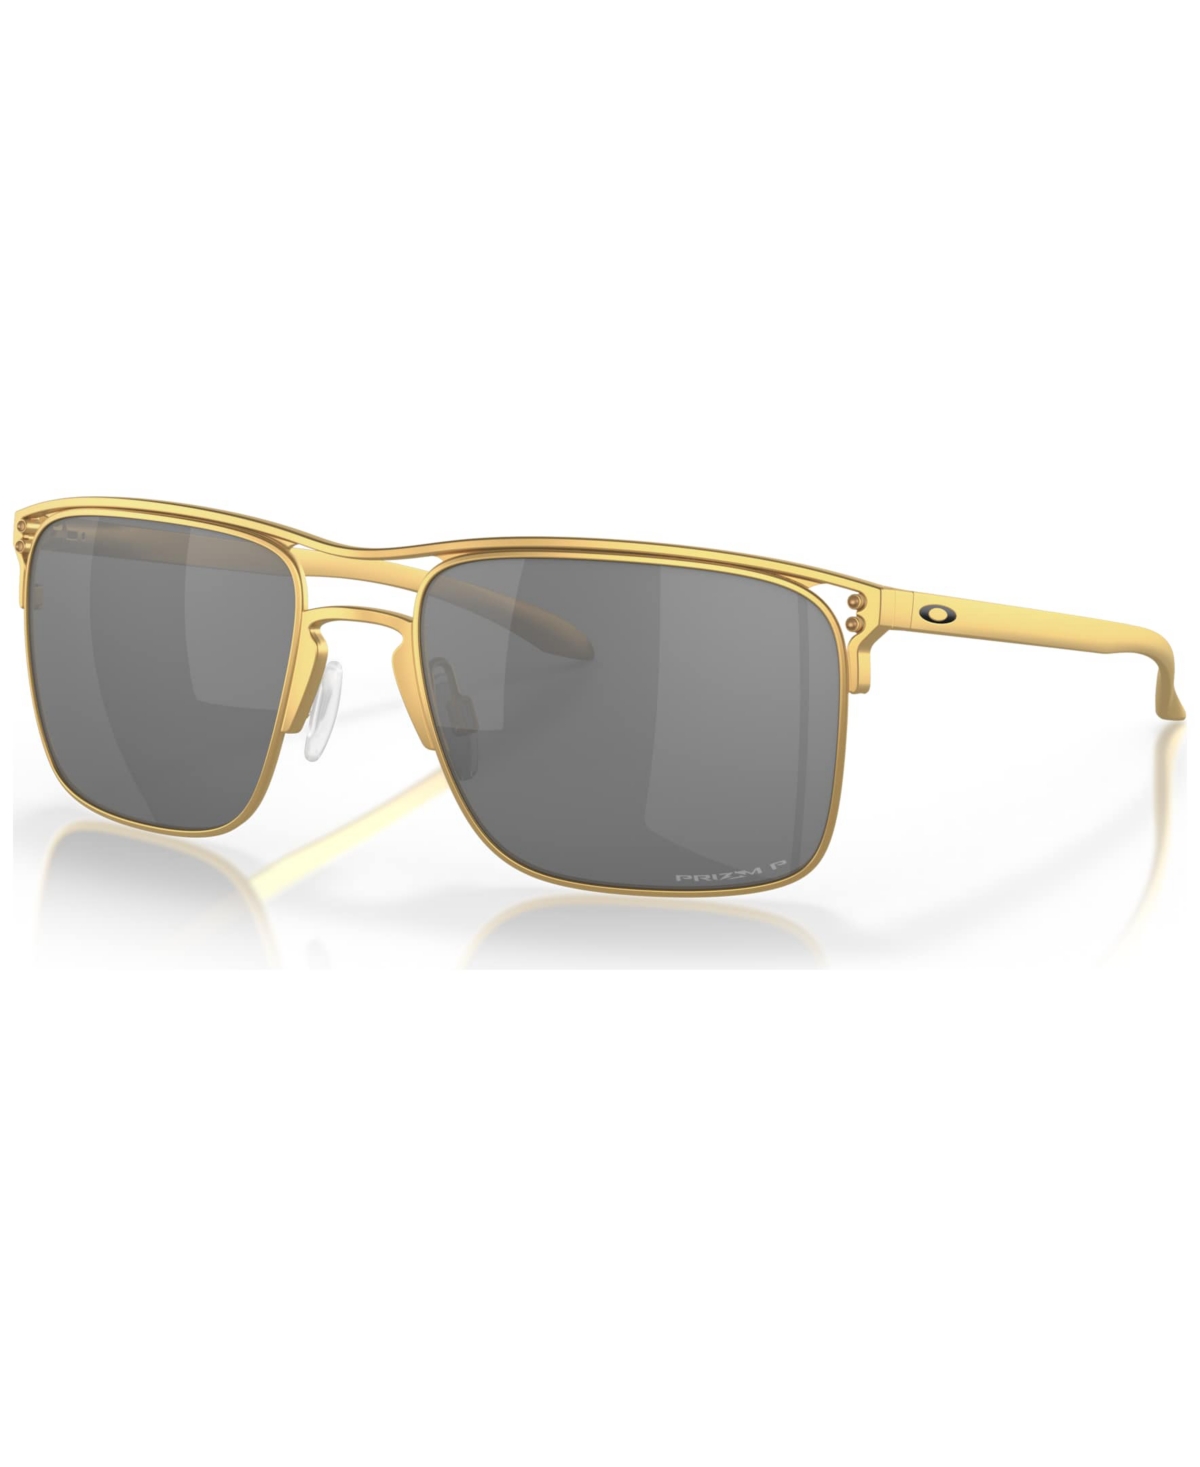 Oakley Men's Polarized Sunglasses, Holbrook Ti In Satin Gold-tone